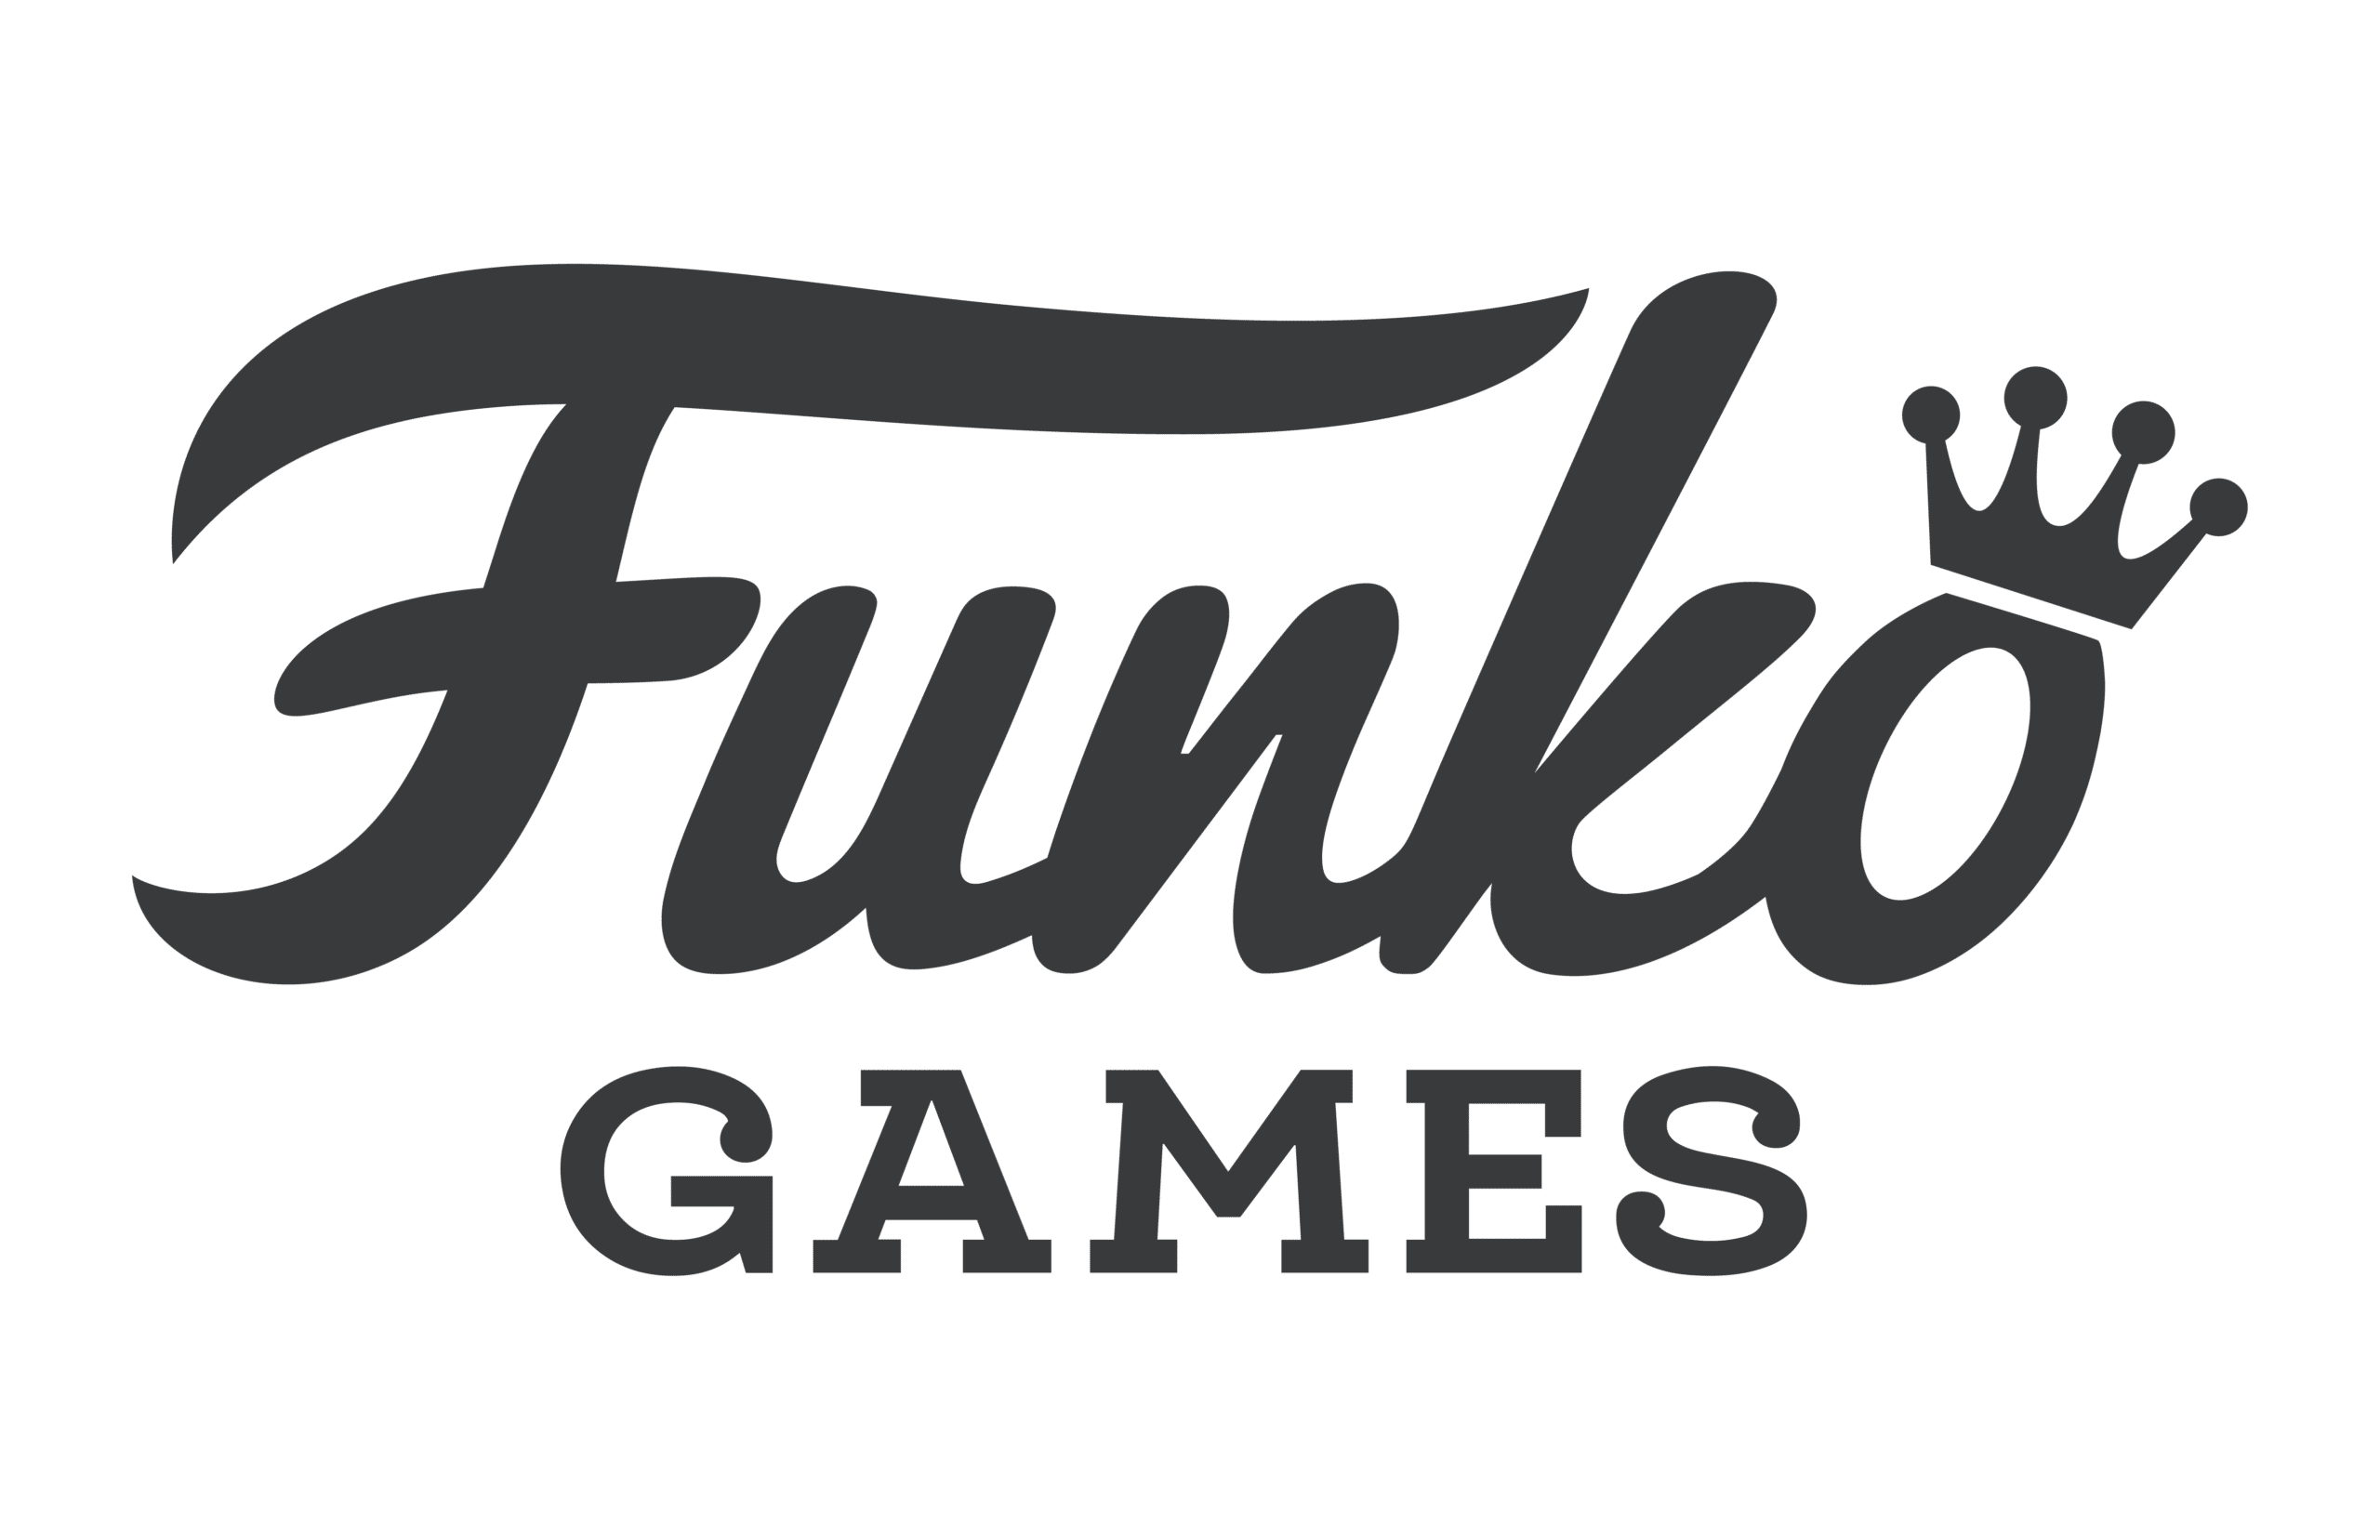 Funko Games Logo